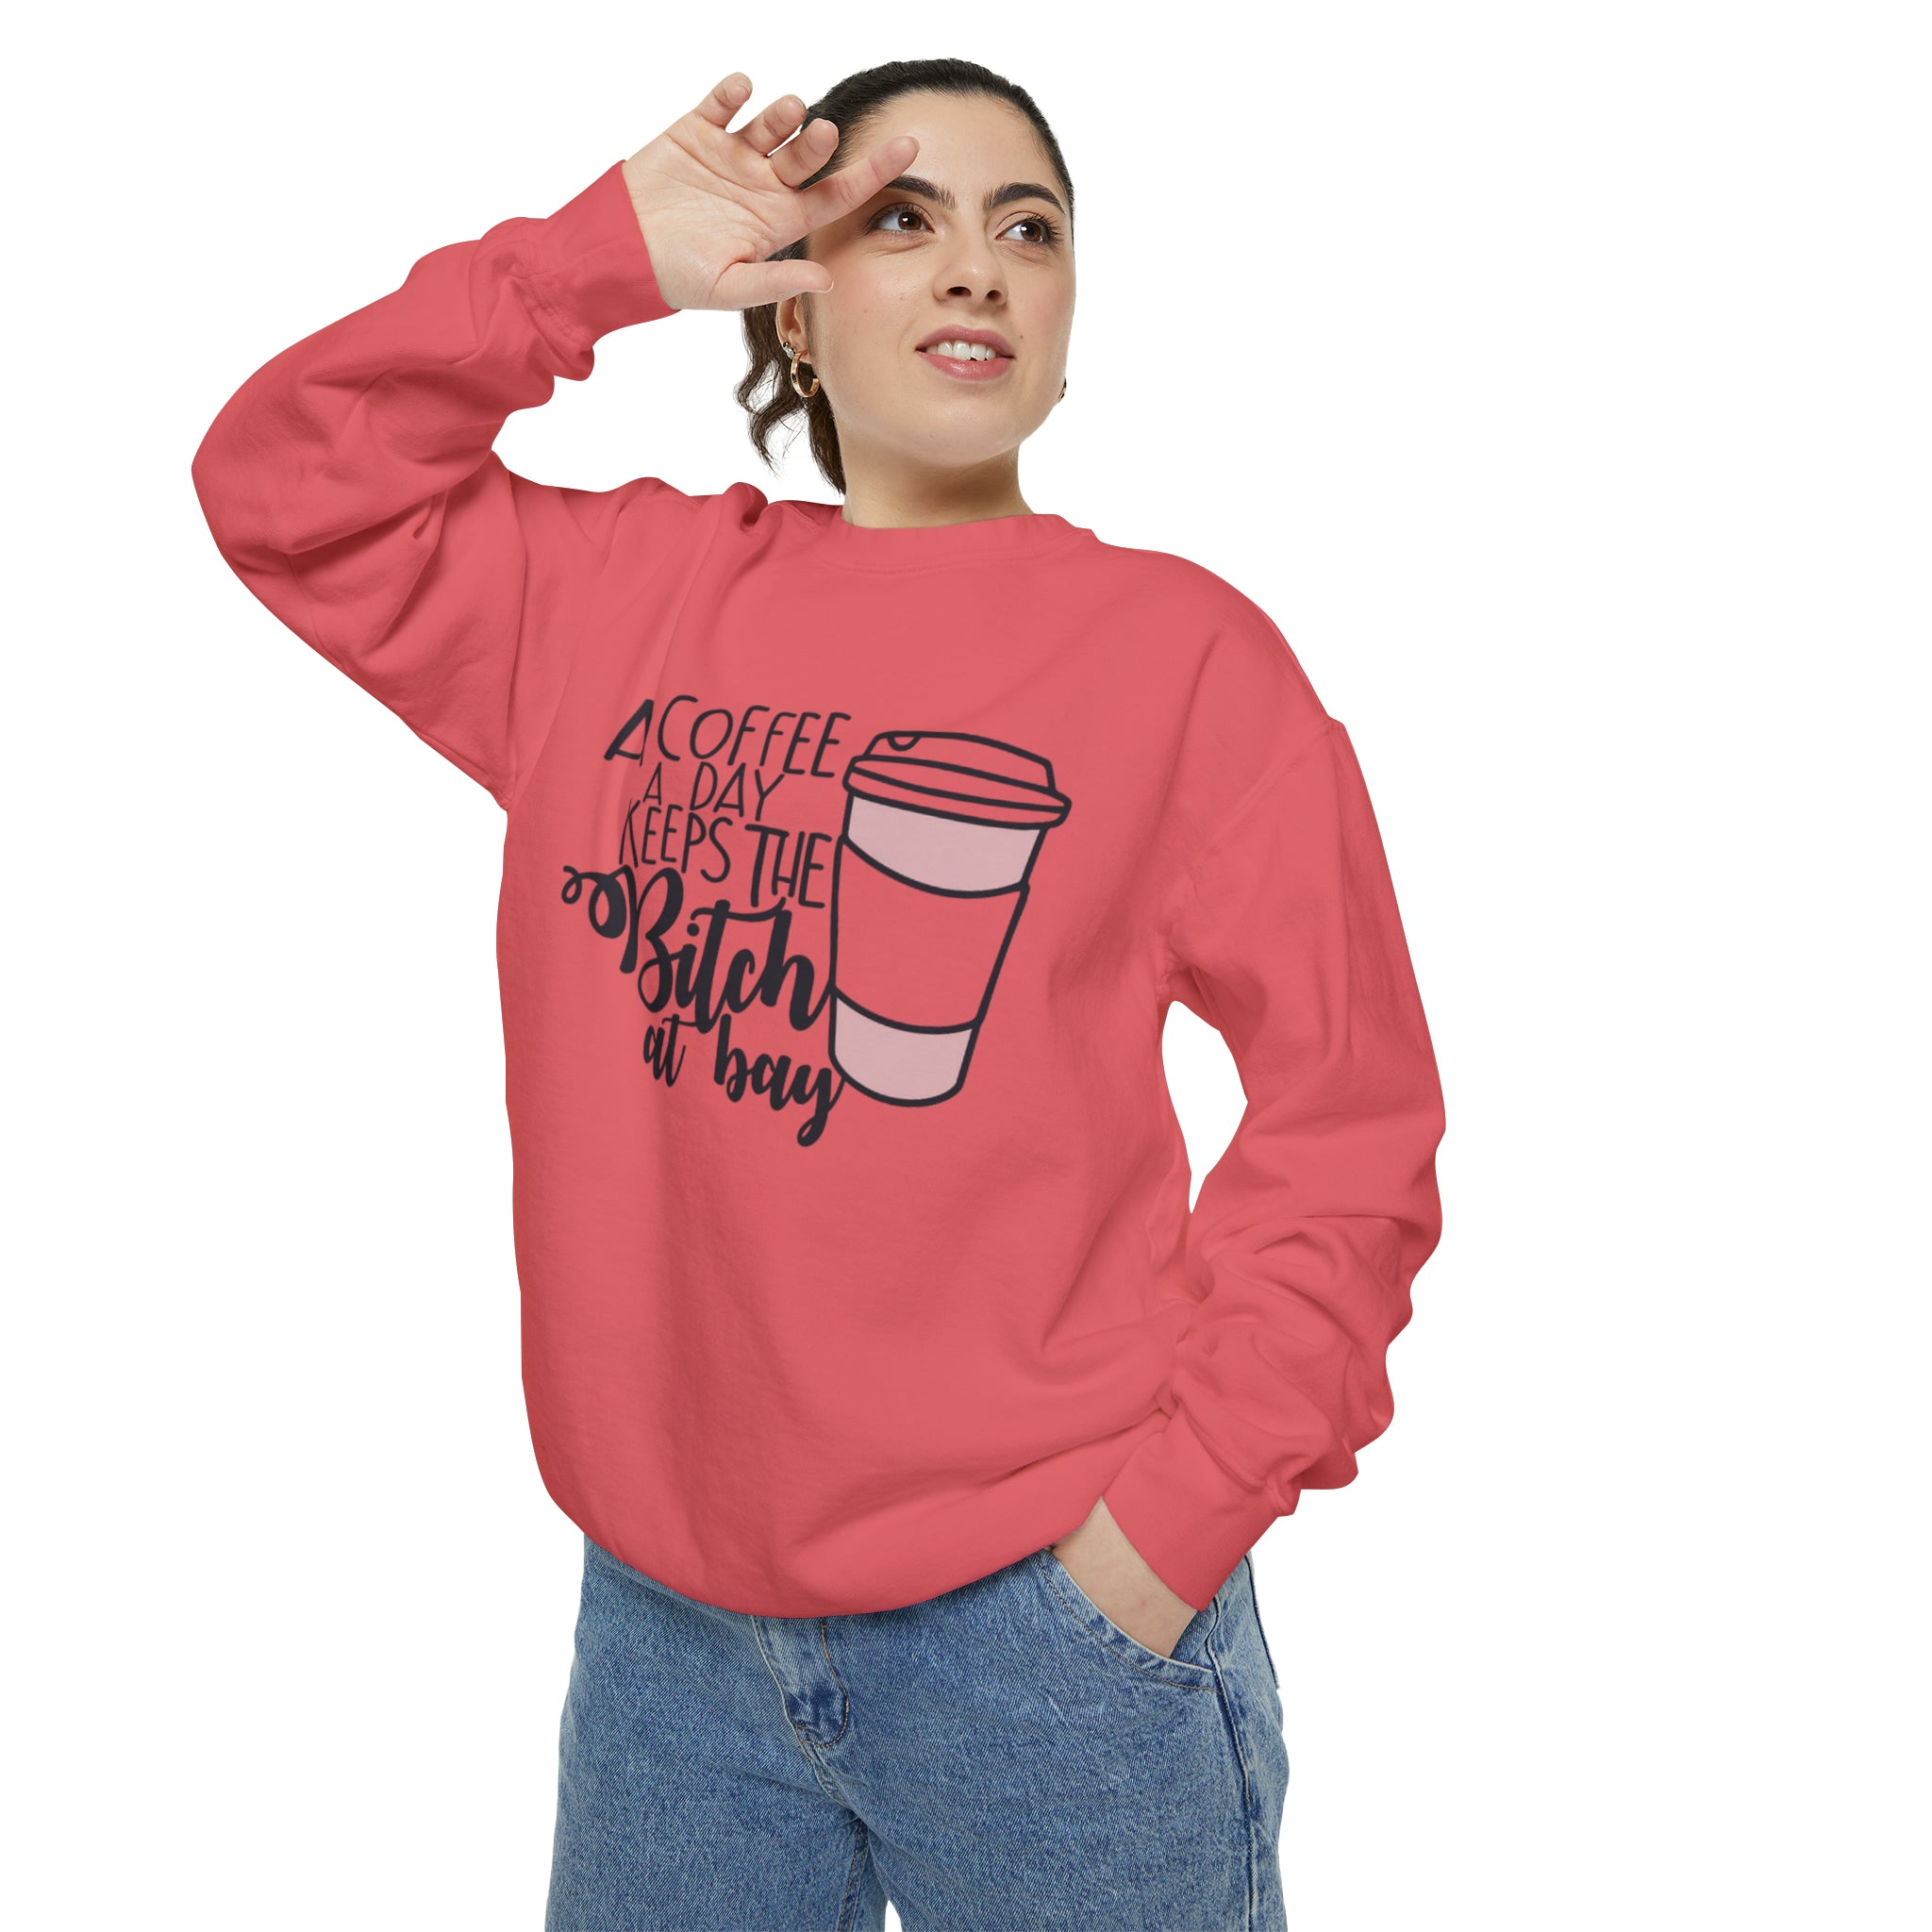 A Coffee a Day Keeps the B!tch at Bay Garment-Dyed Sweatshirt